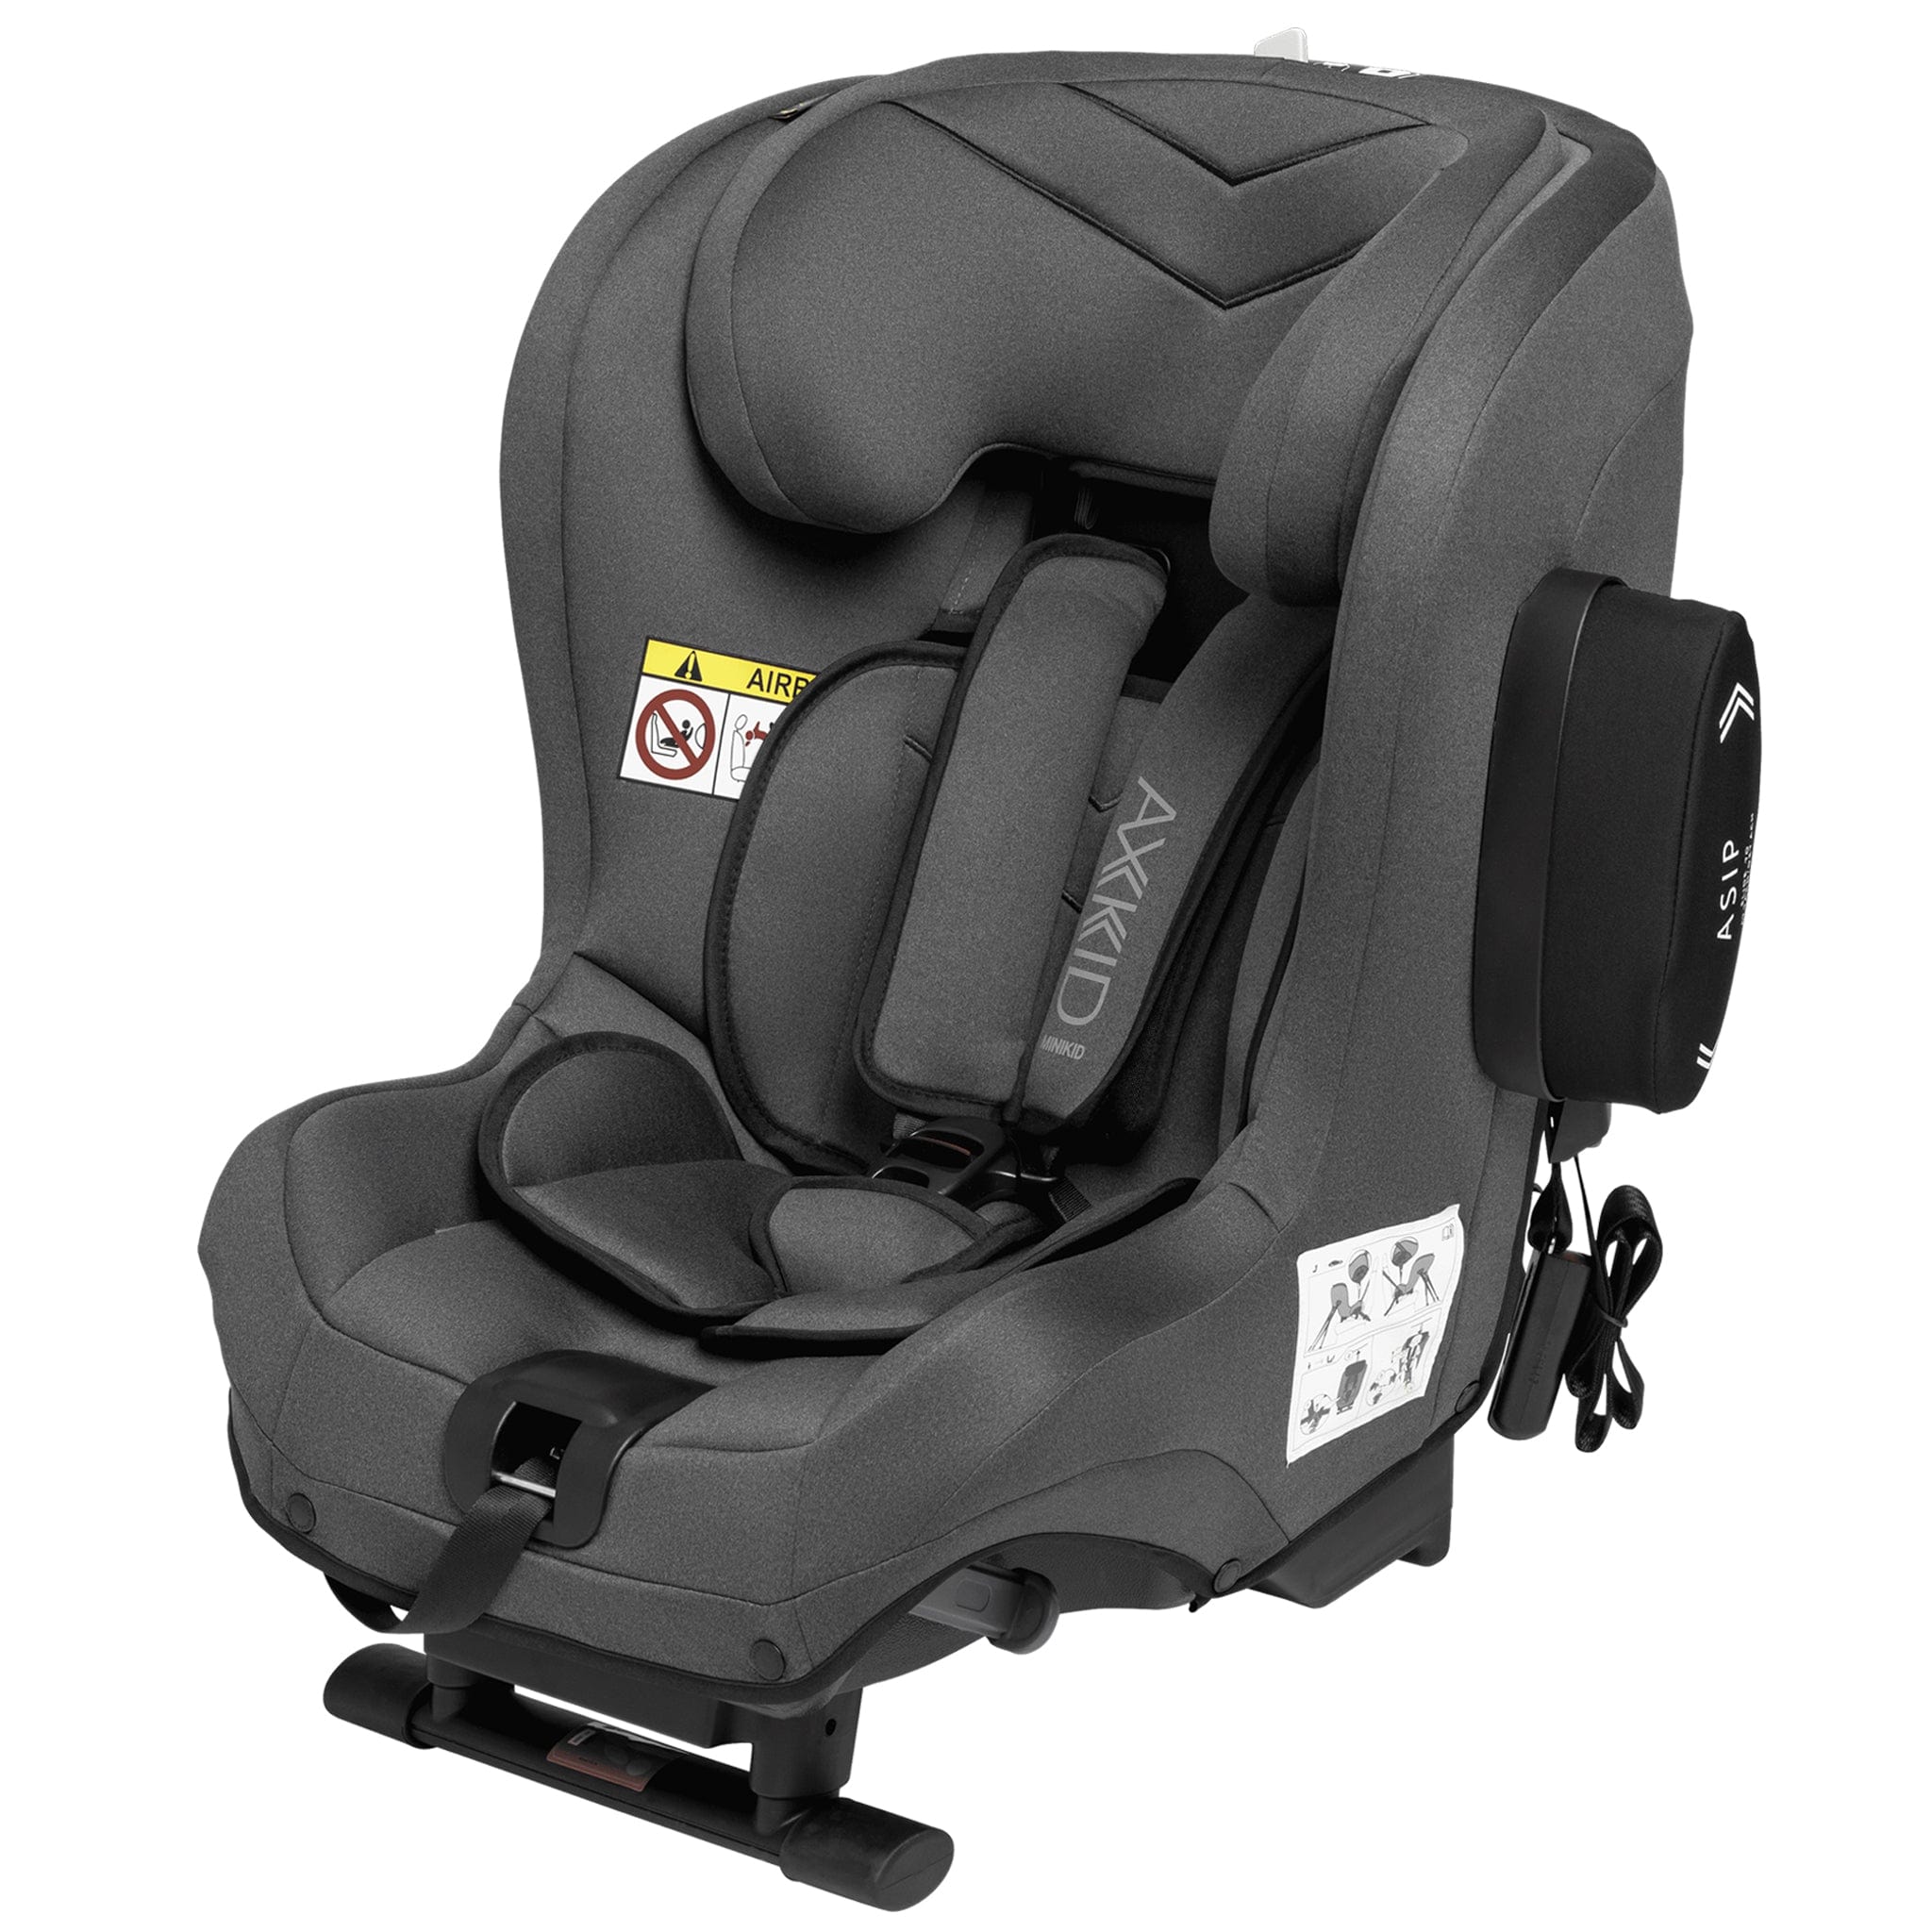 Axkid rear facing car seats Axkid Minikid 2 - Granite Melange Premium & Free Wedge 10526-GRA-MEL